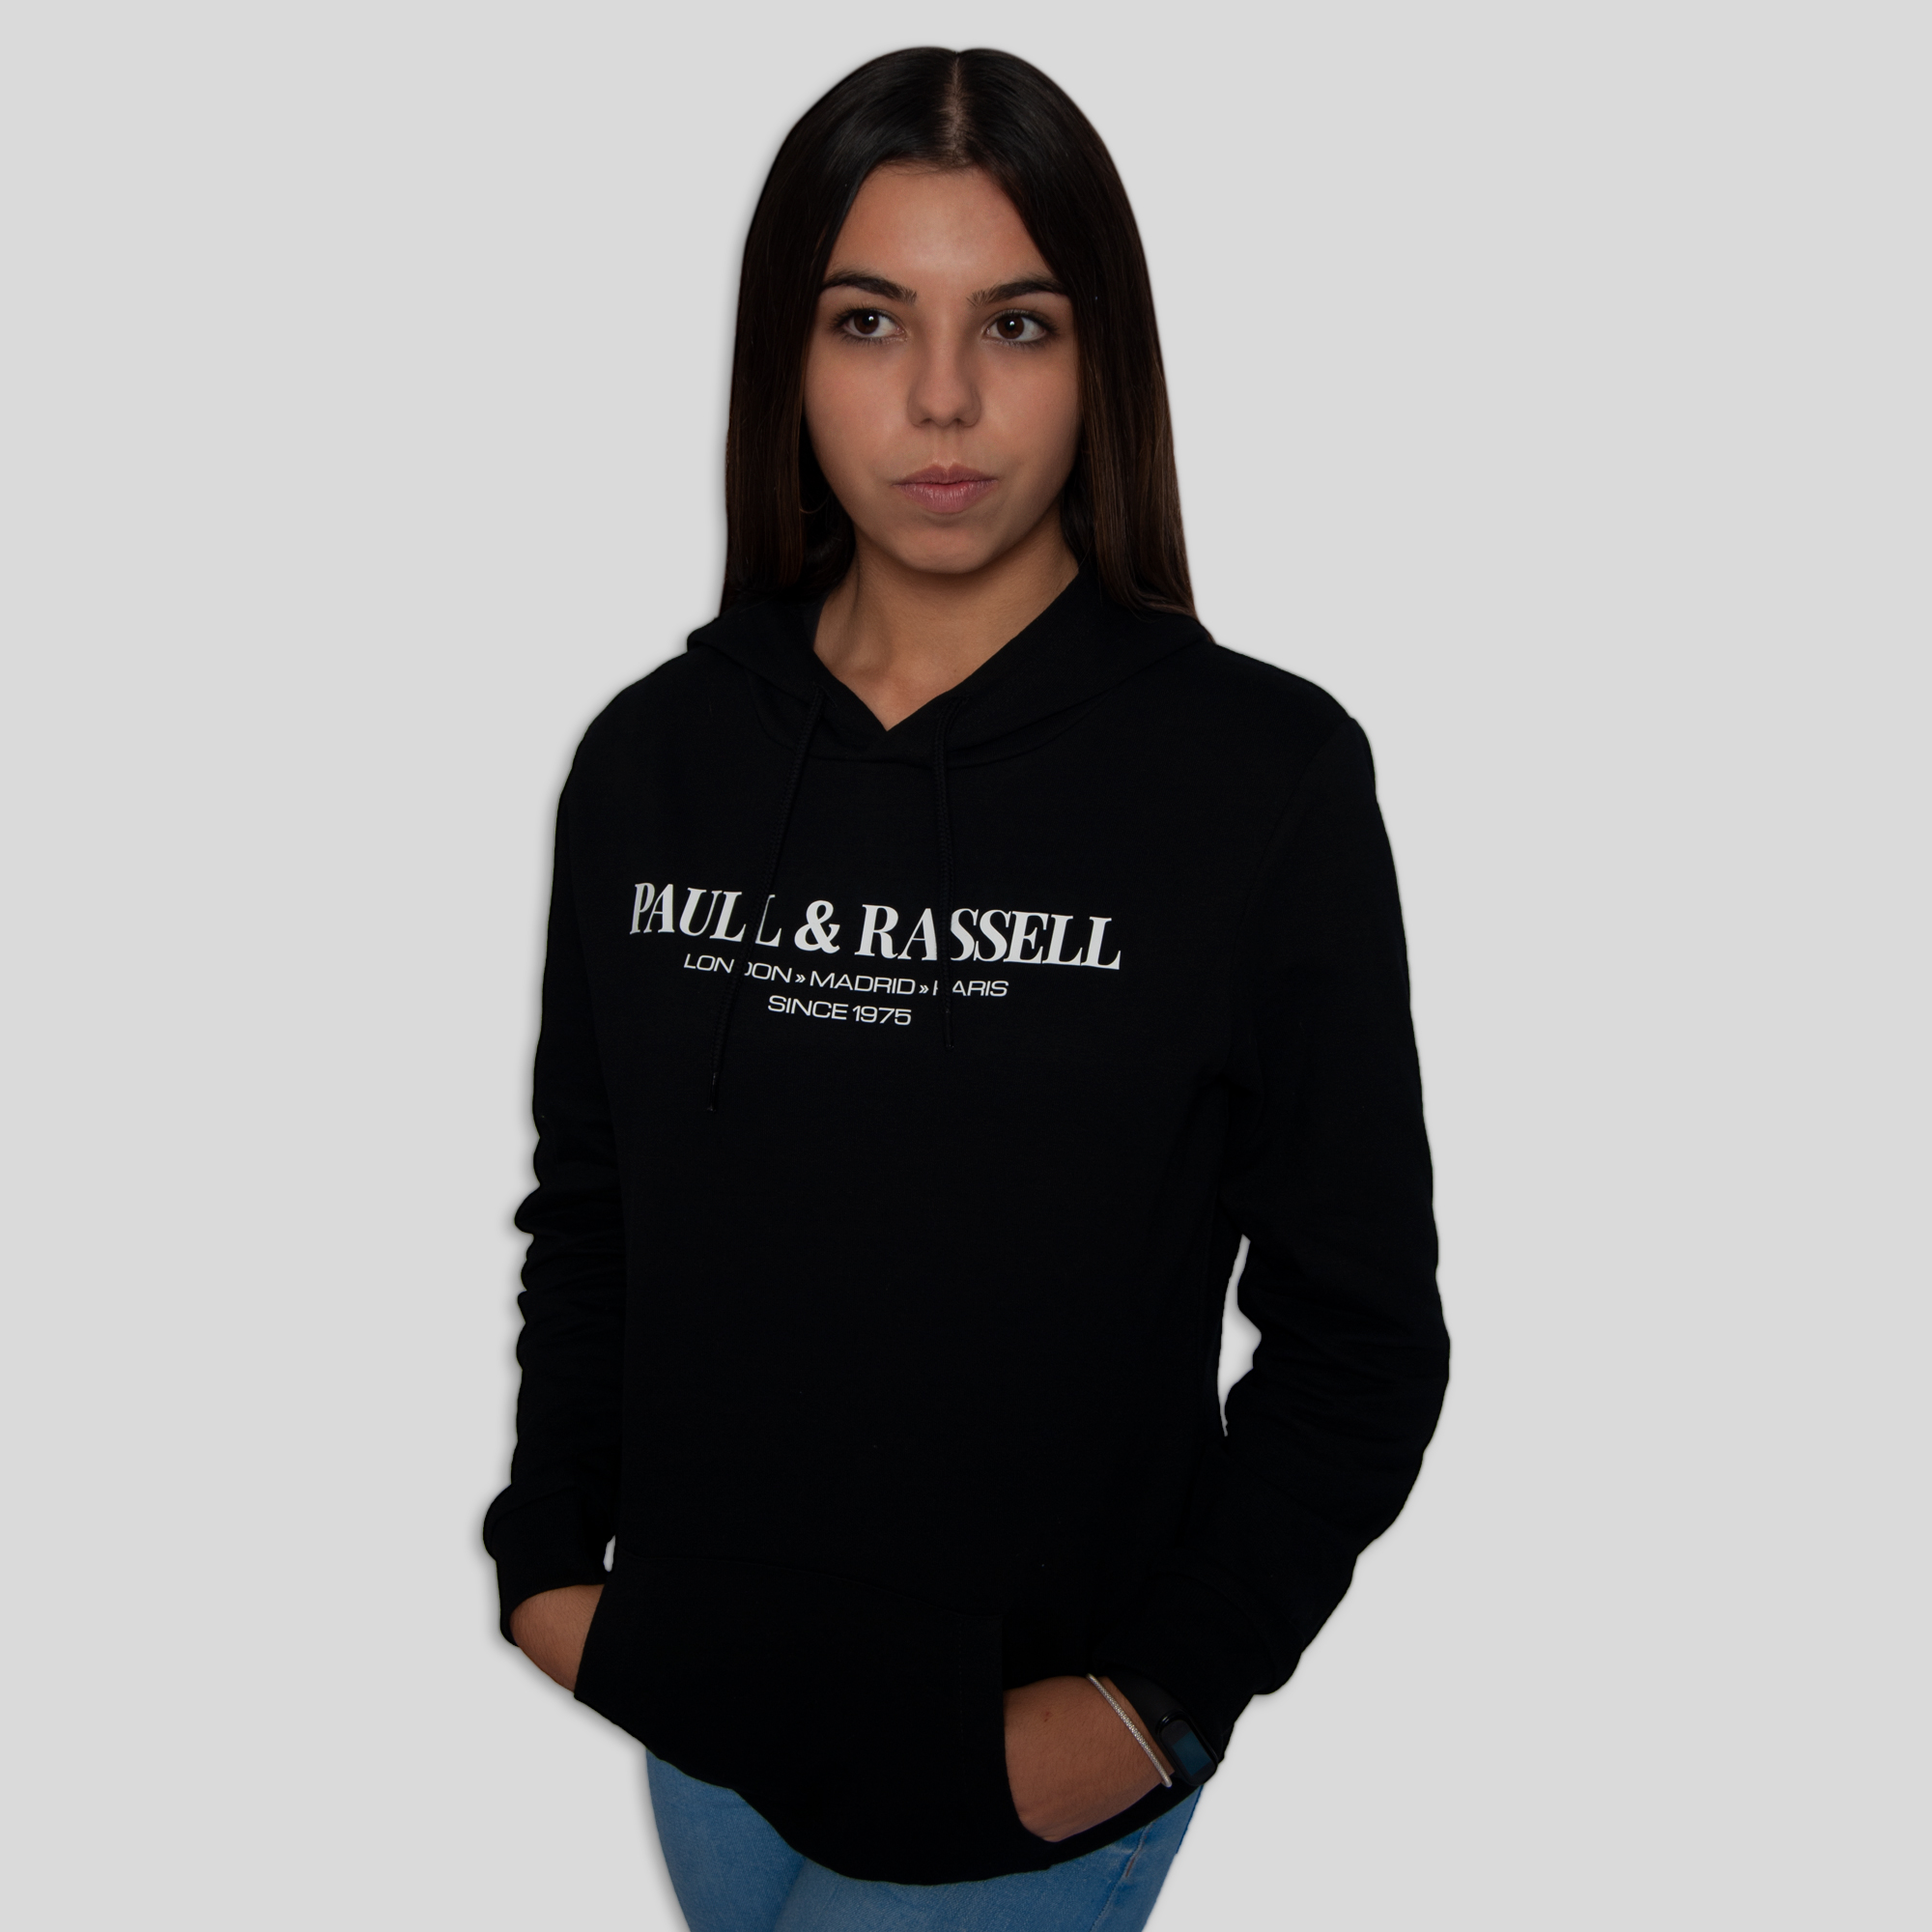 Paull Rassell Elite-Organic-Sweatshirt-Woman 413 | Sudadera-elite Orgánica y ecoligica para-mujer | Sudadera-con-corte moderno para mujer